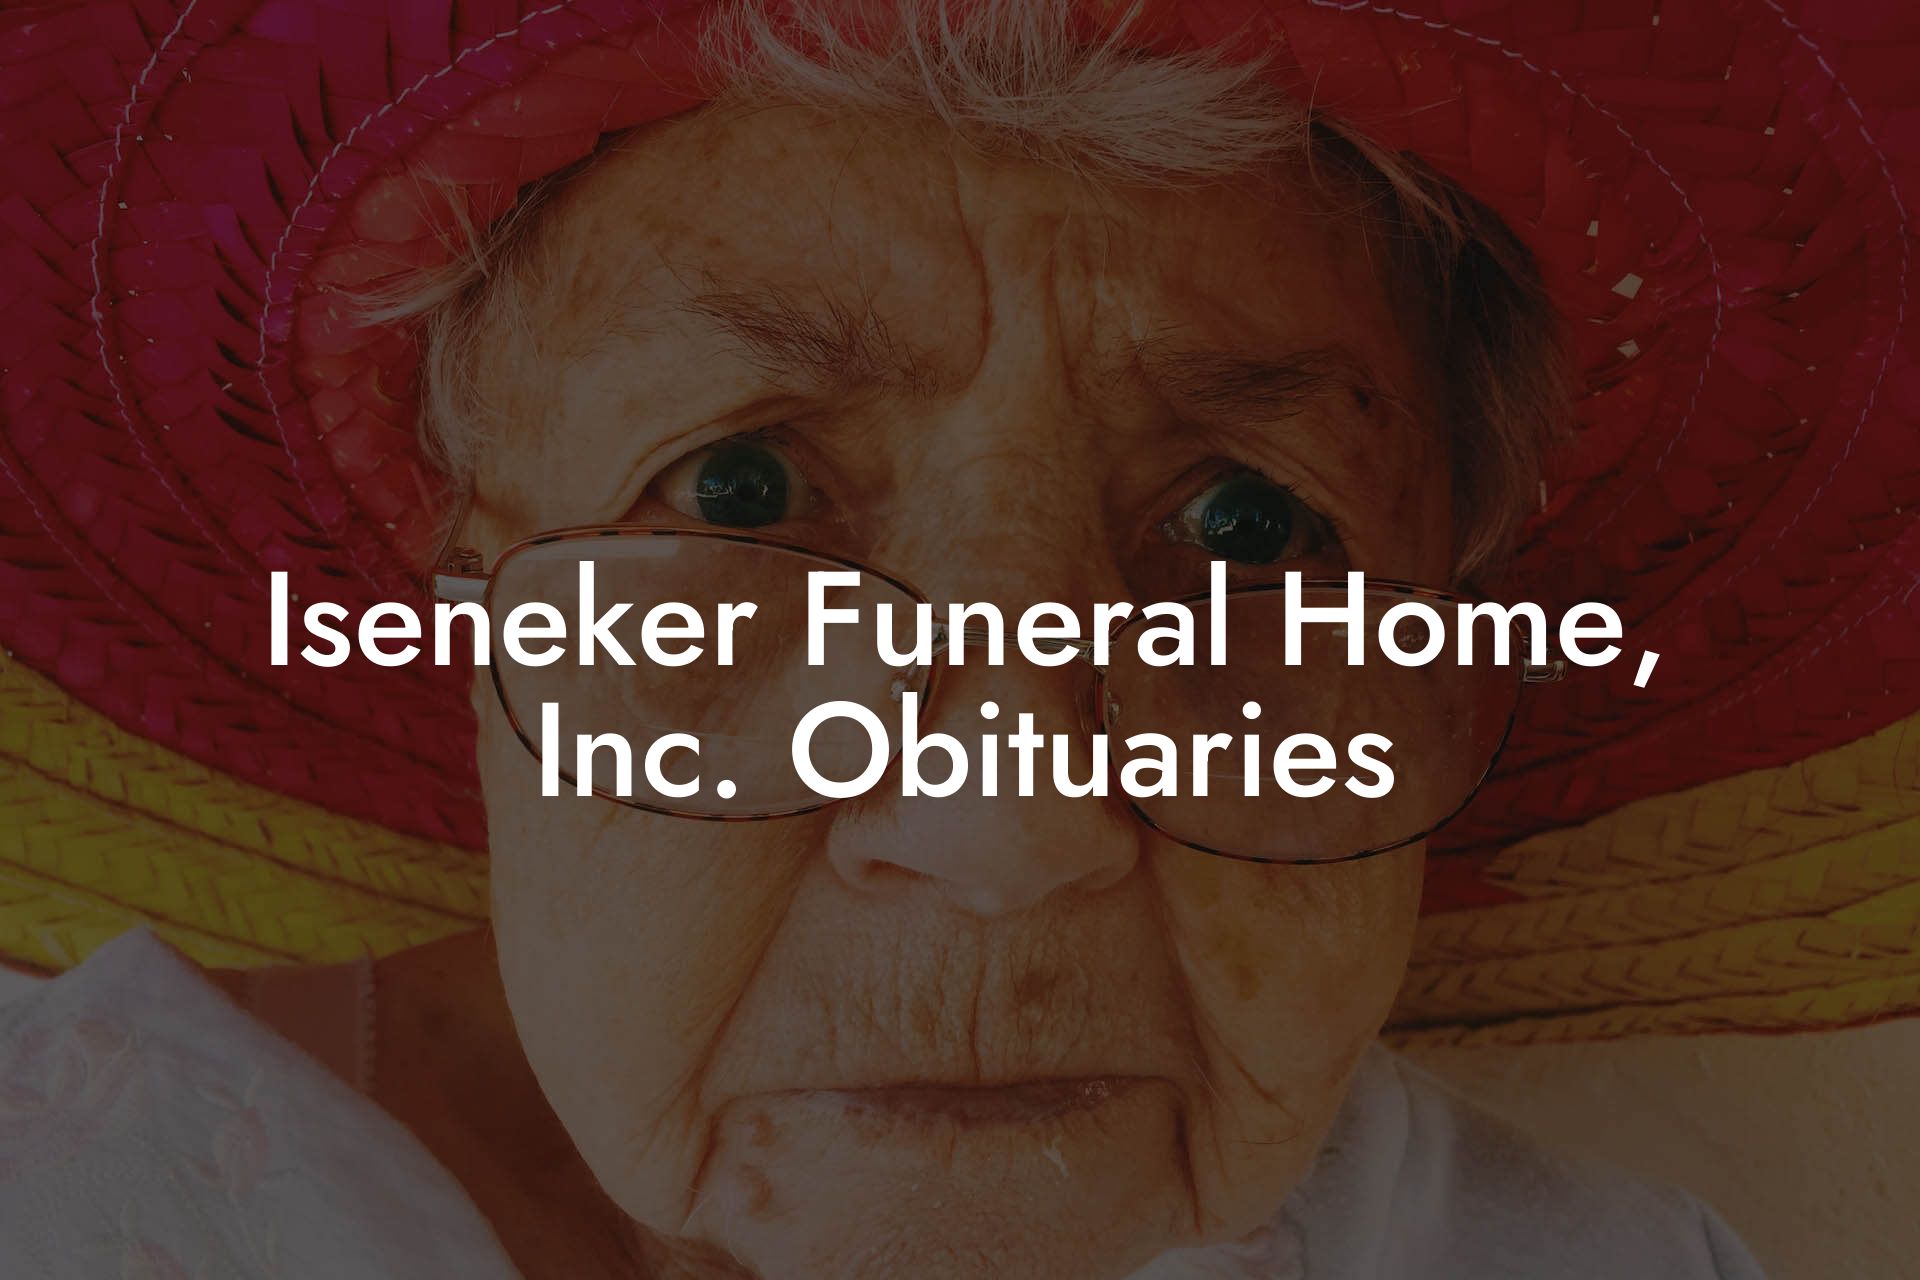 Iseneker Funeral Home, Inc. Obituaries